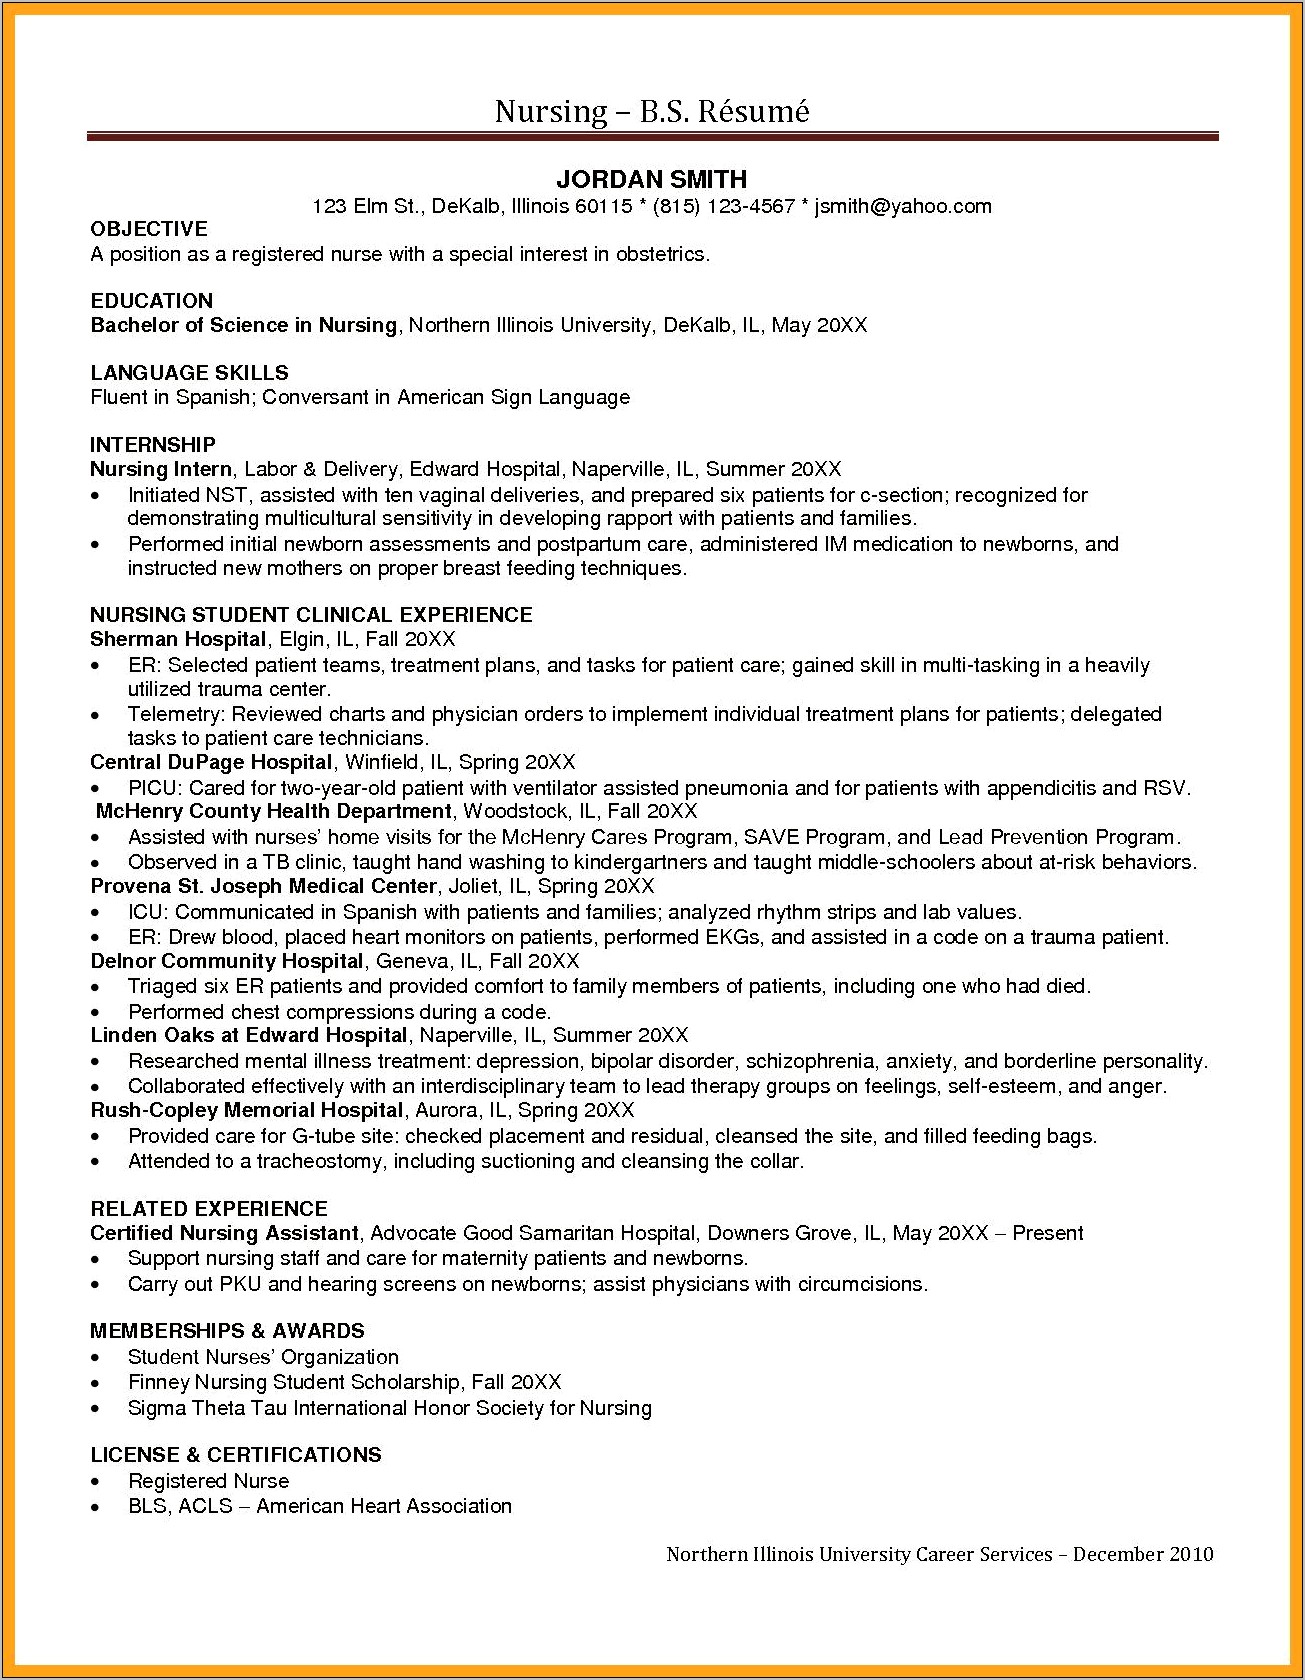 Home Care Nurse Job Description Resume